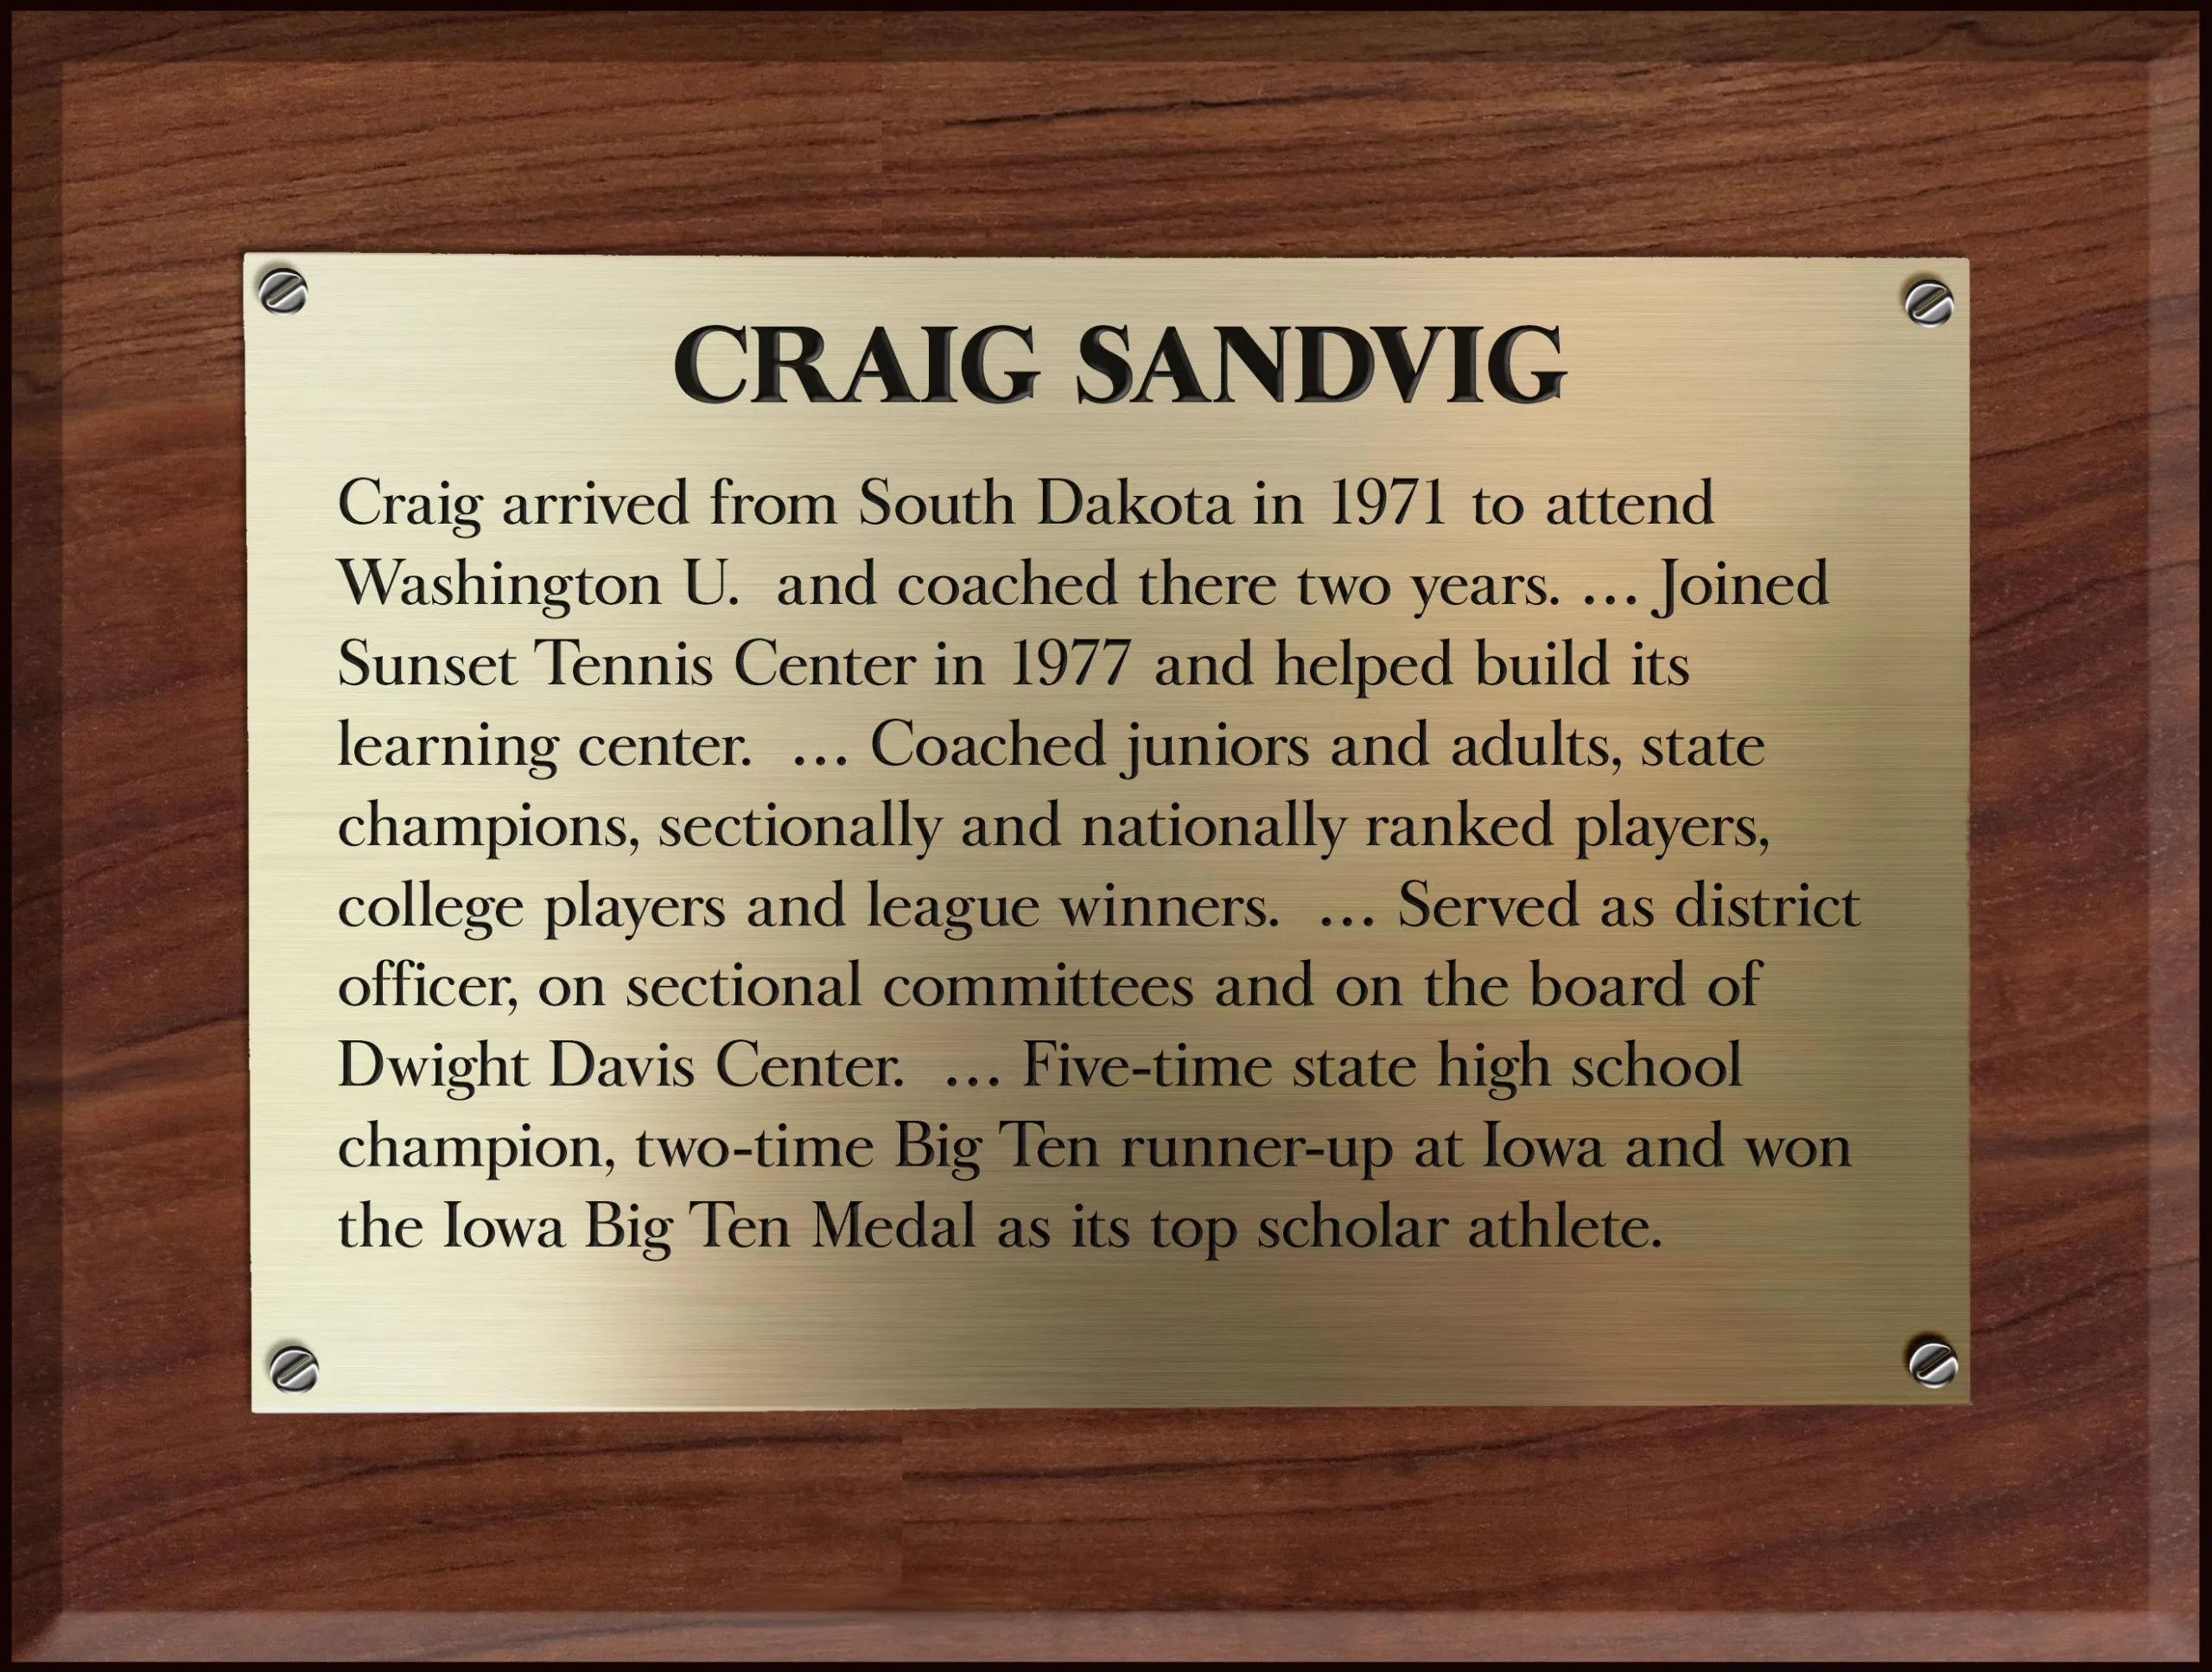 Craig Sandvig